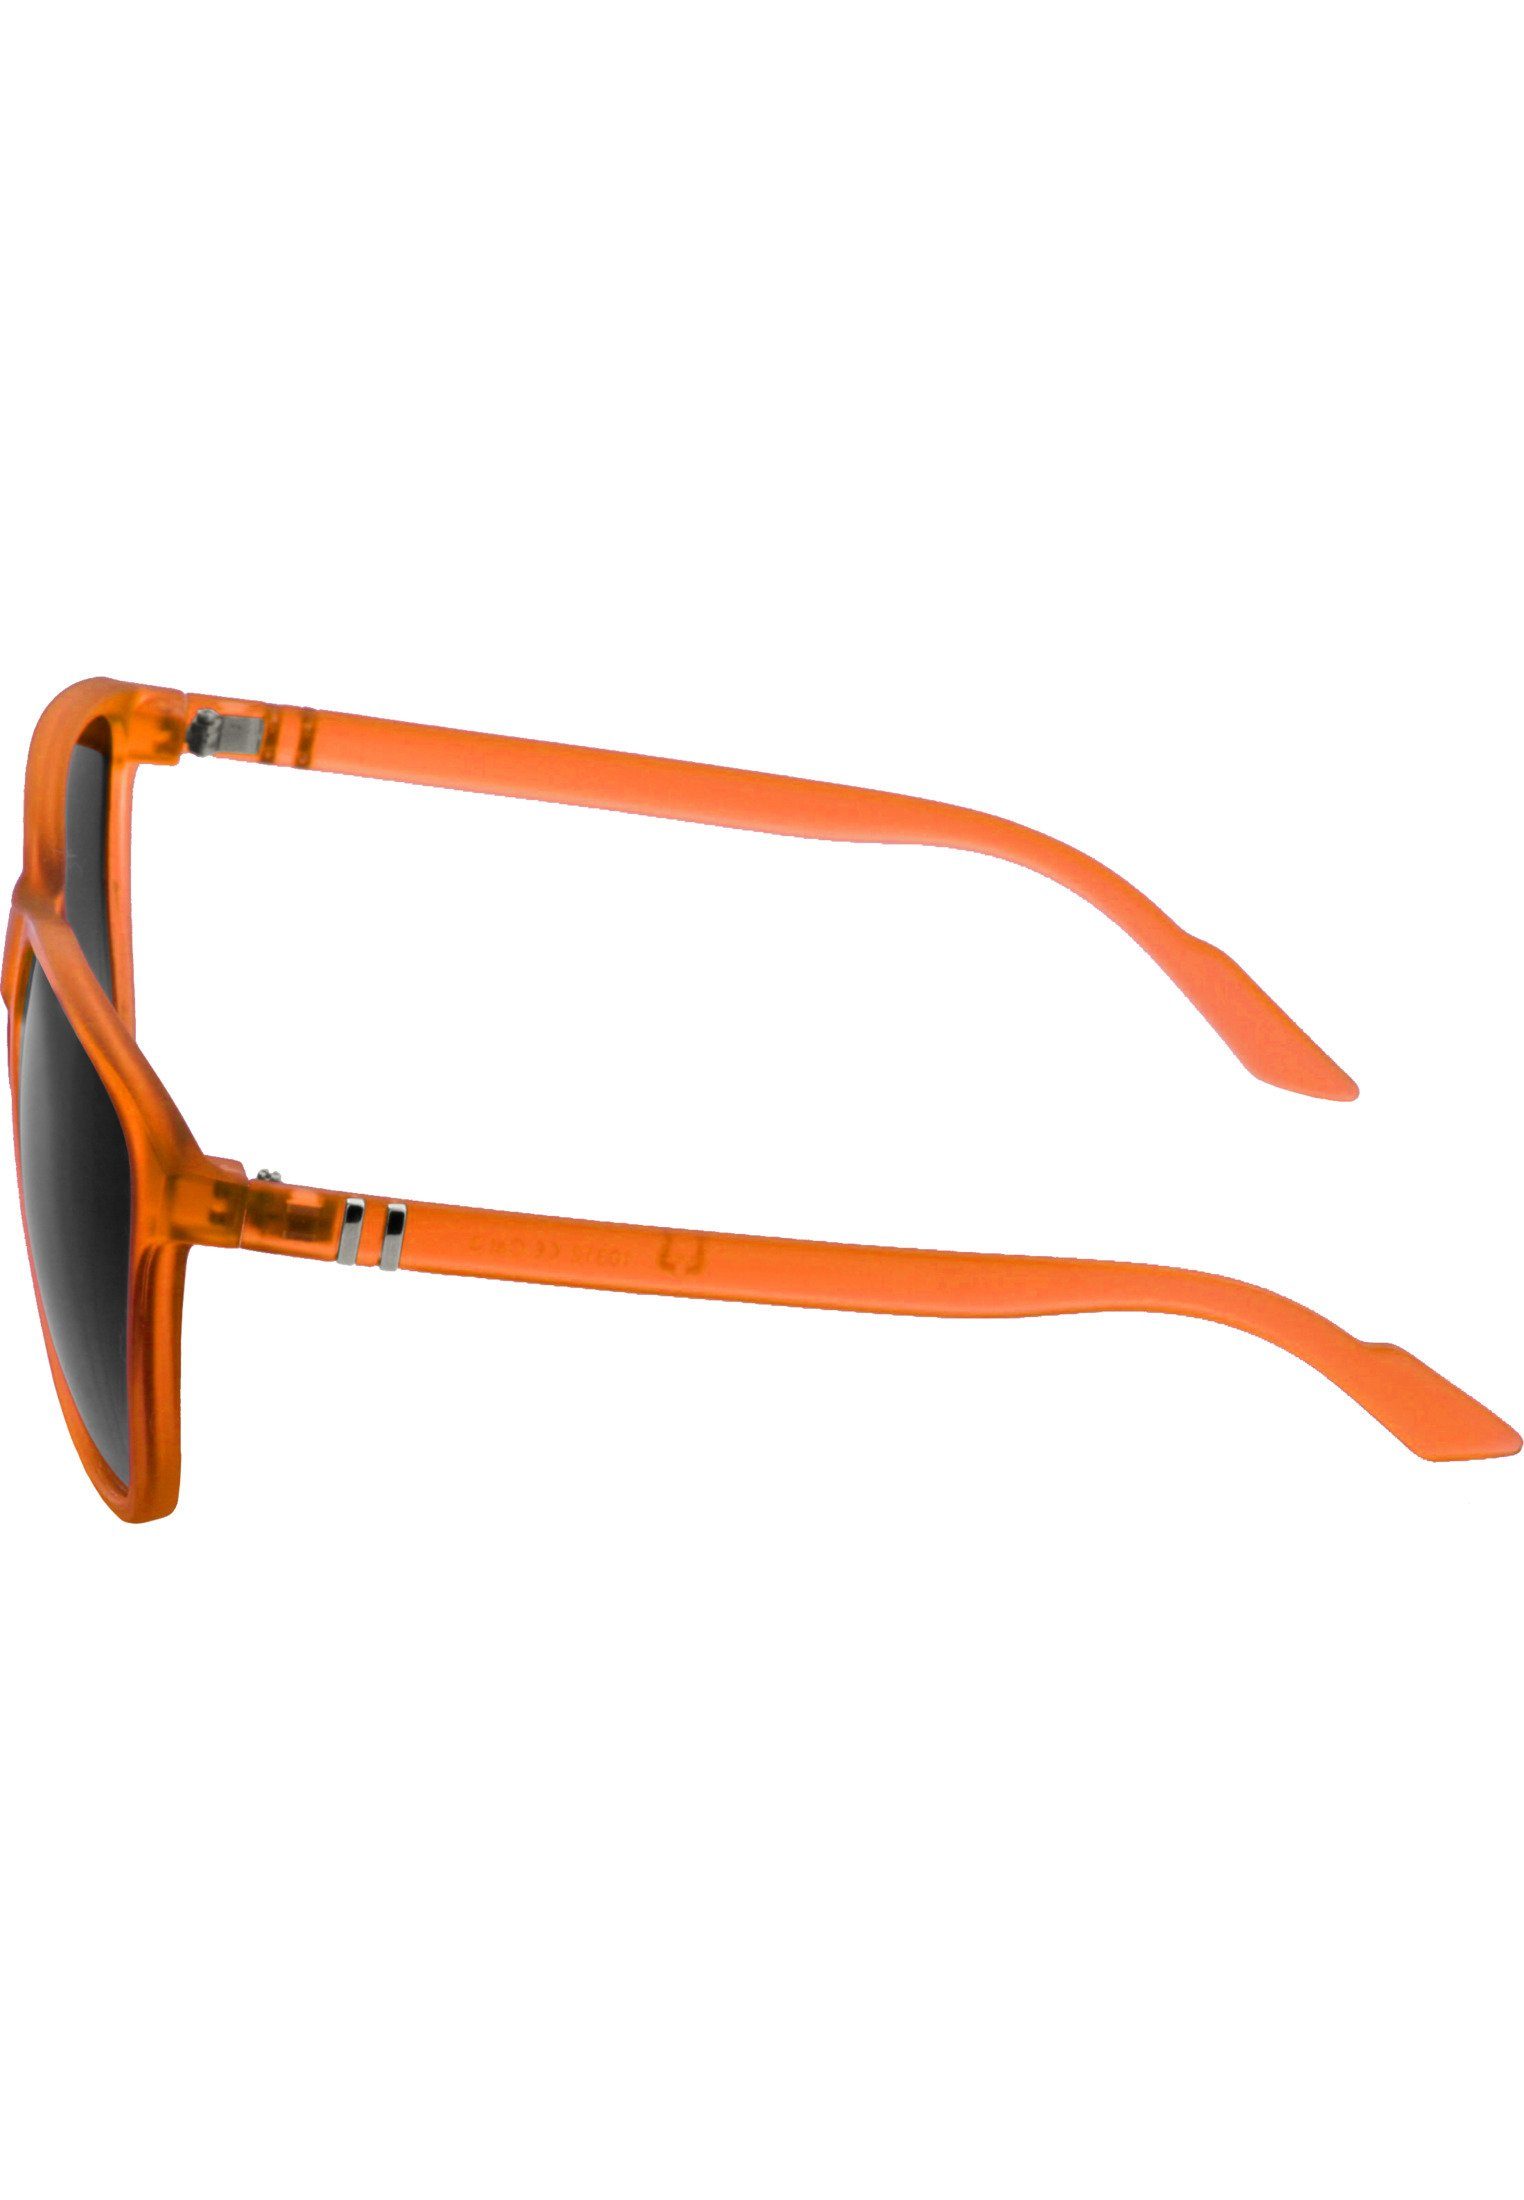 MSTRDS Sonnenbrille neonorange Accessoires Chirwa Sunglasses